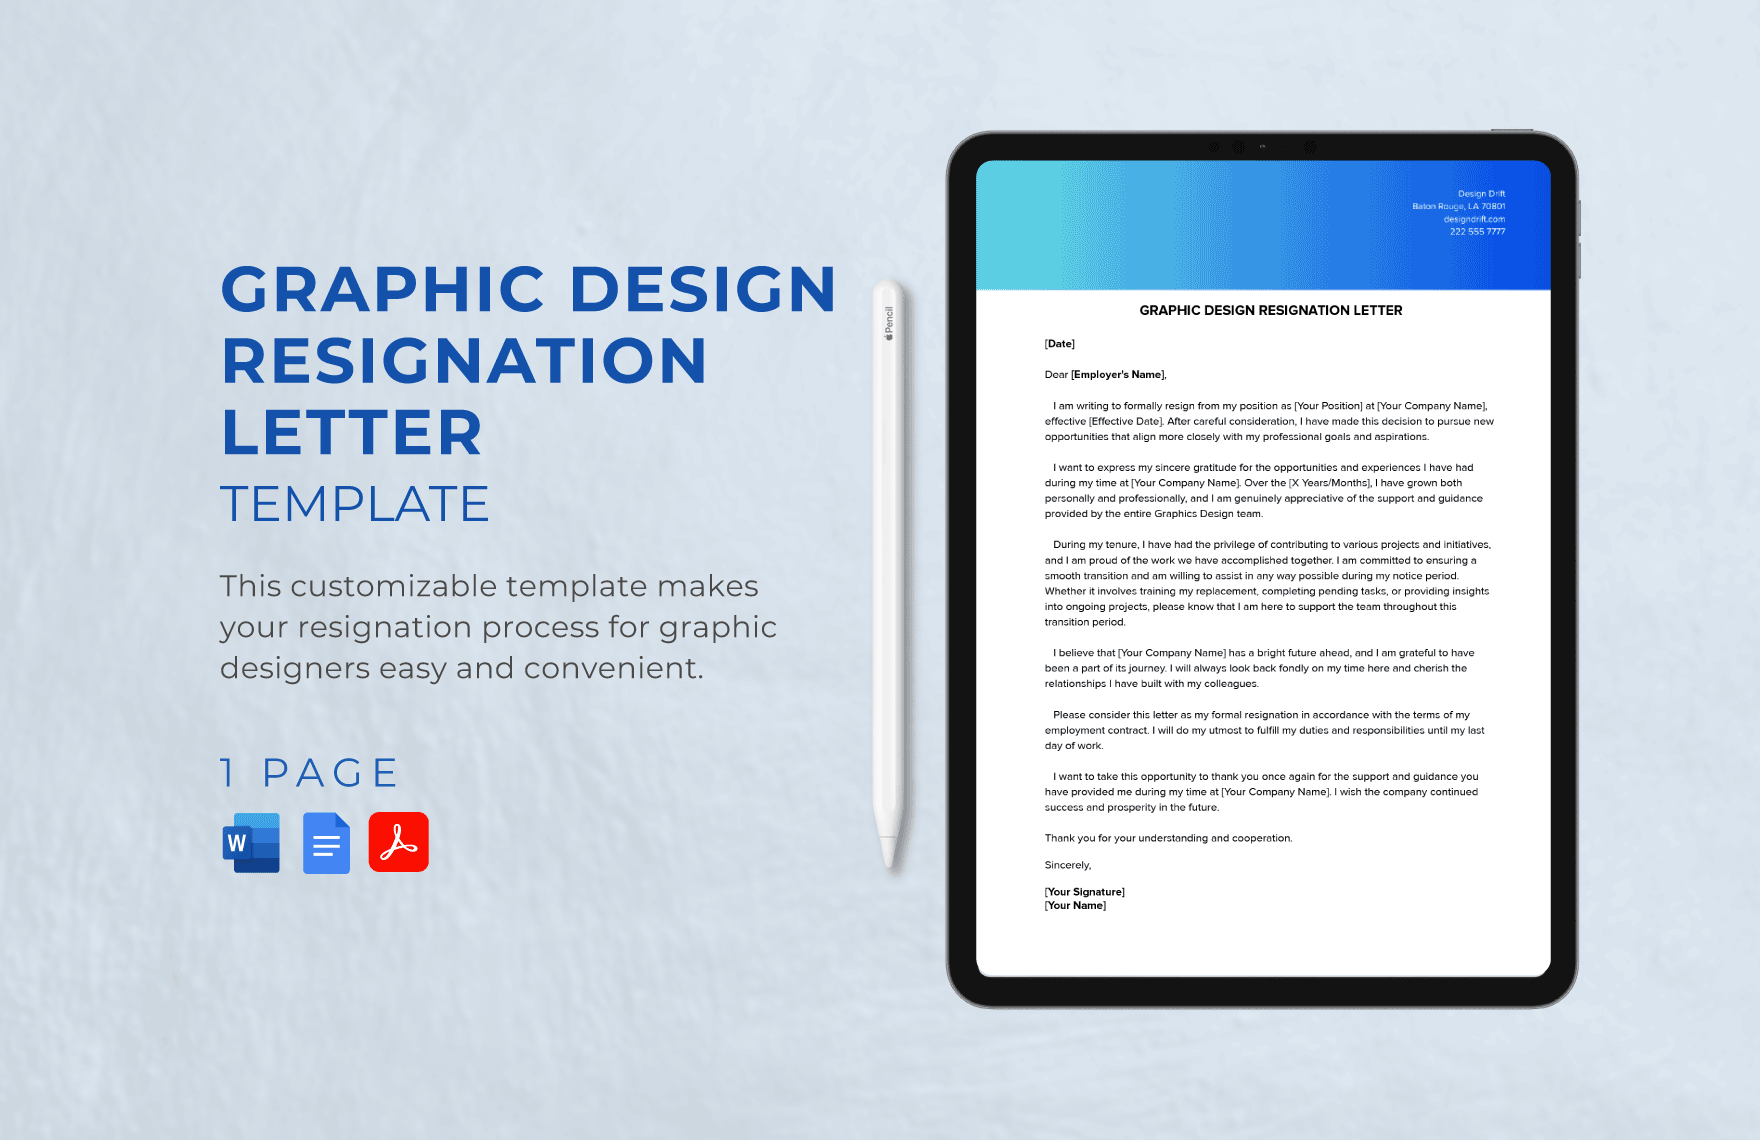 Graphic Design Resignation Letter Template